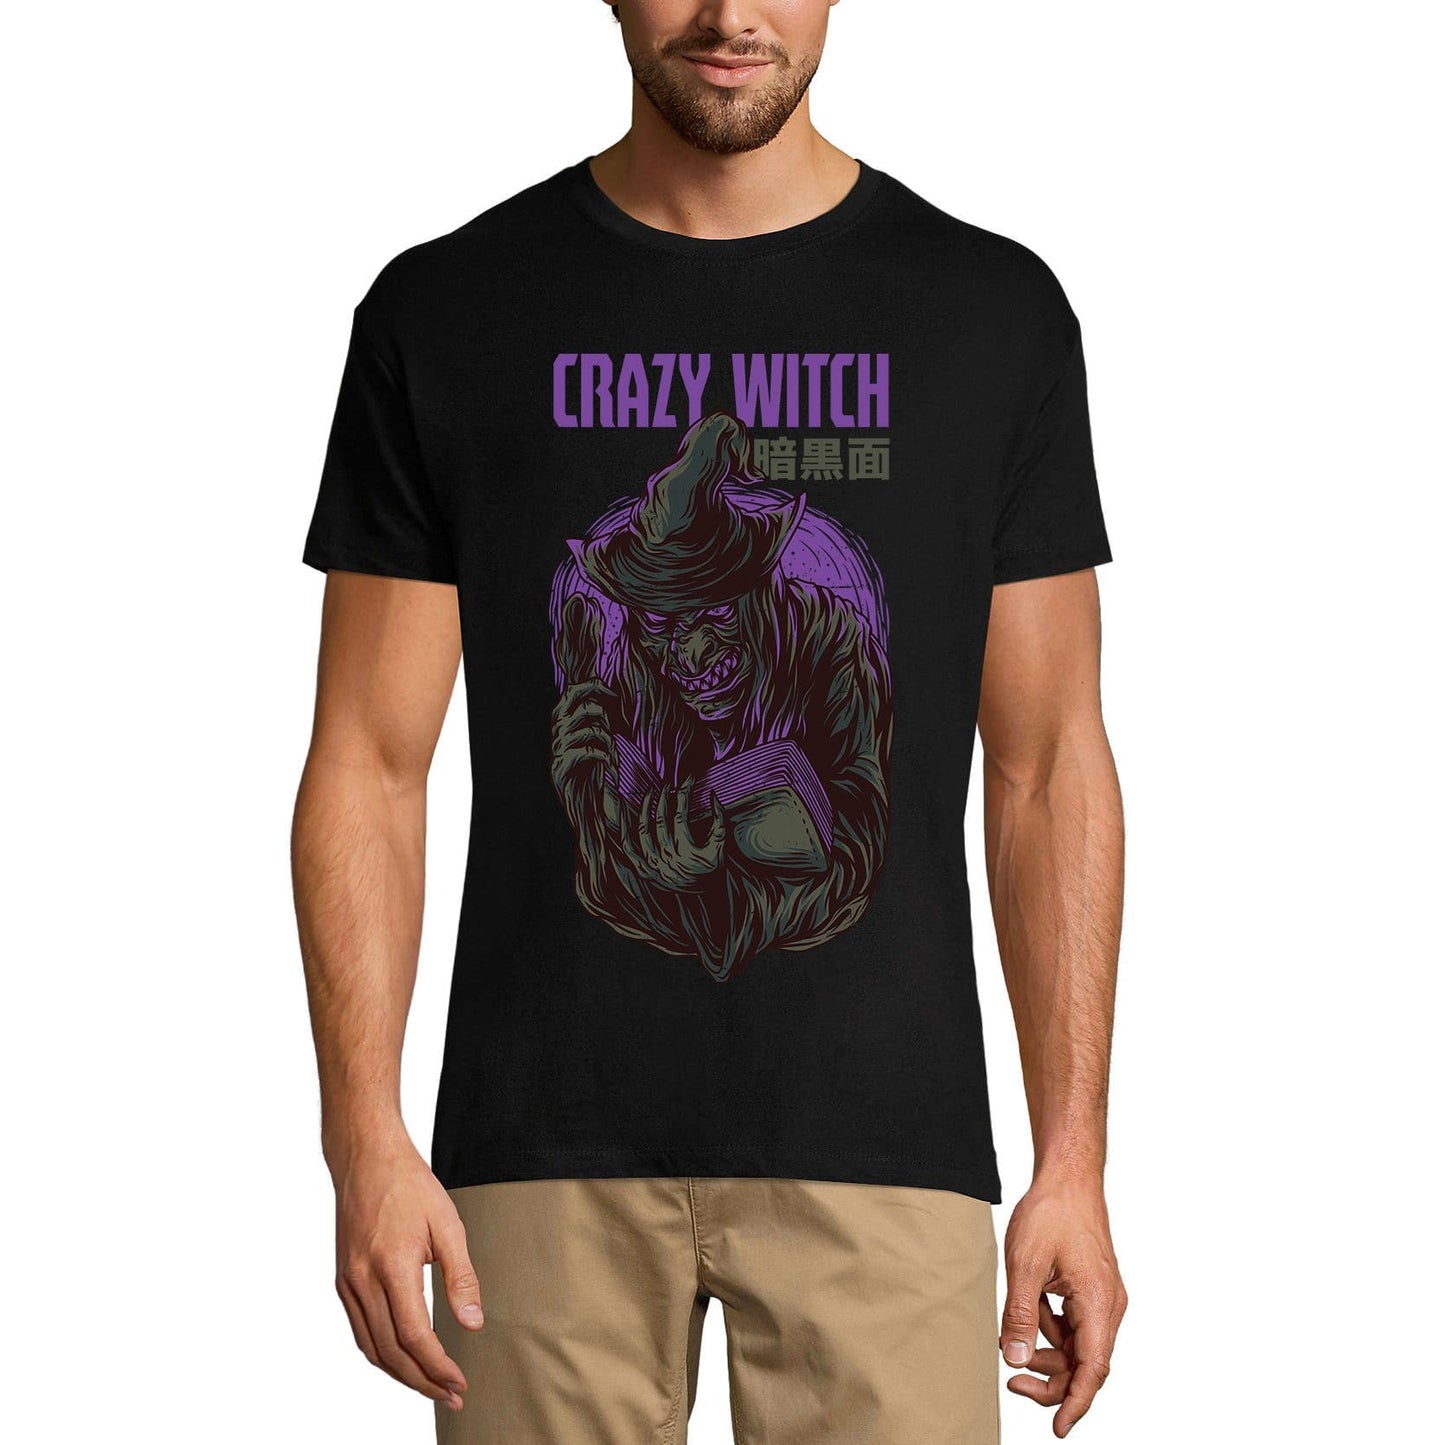 ULTRABASIC Men's Novelty T-Shirt Crazy Witch - Halloween Creepy Gothic Tee Shirt